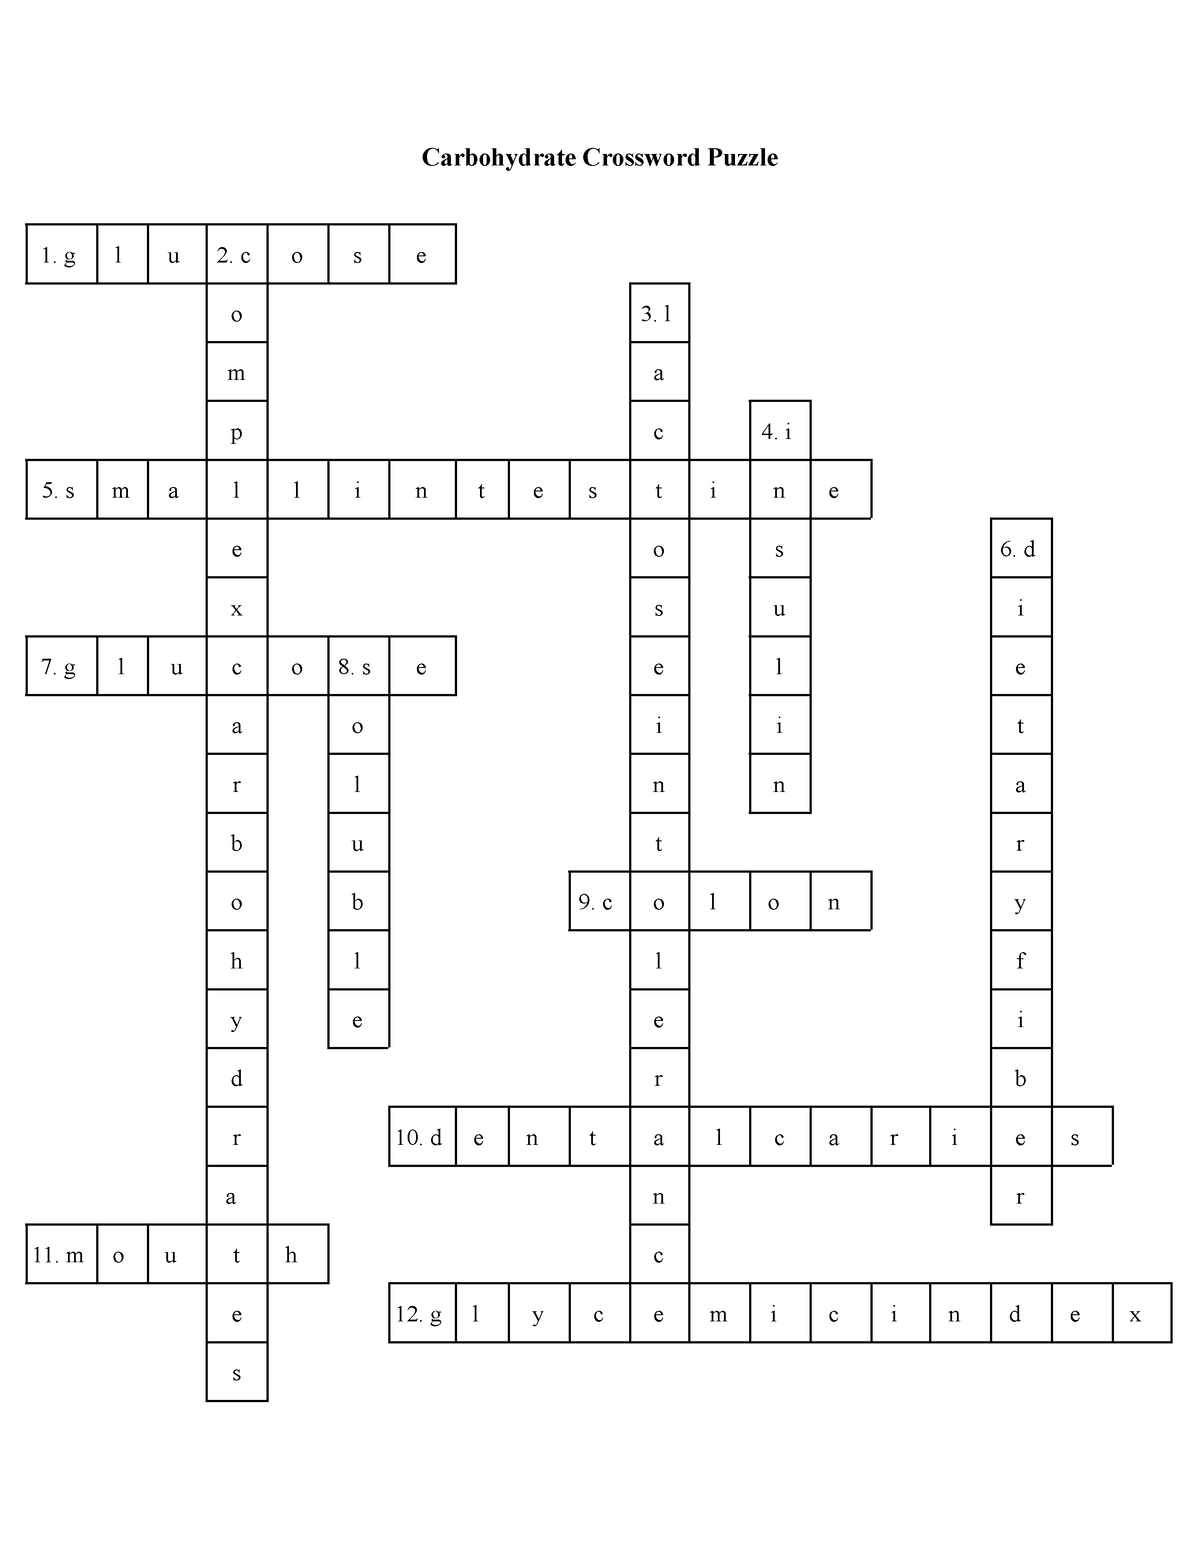 Macronutrient Crossword Carbohydrate Crossword Puzzle g l u 2 c o s